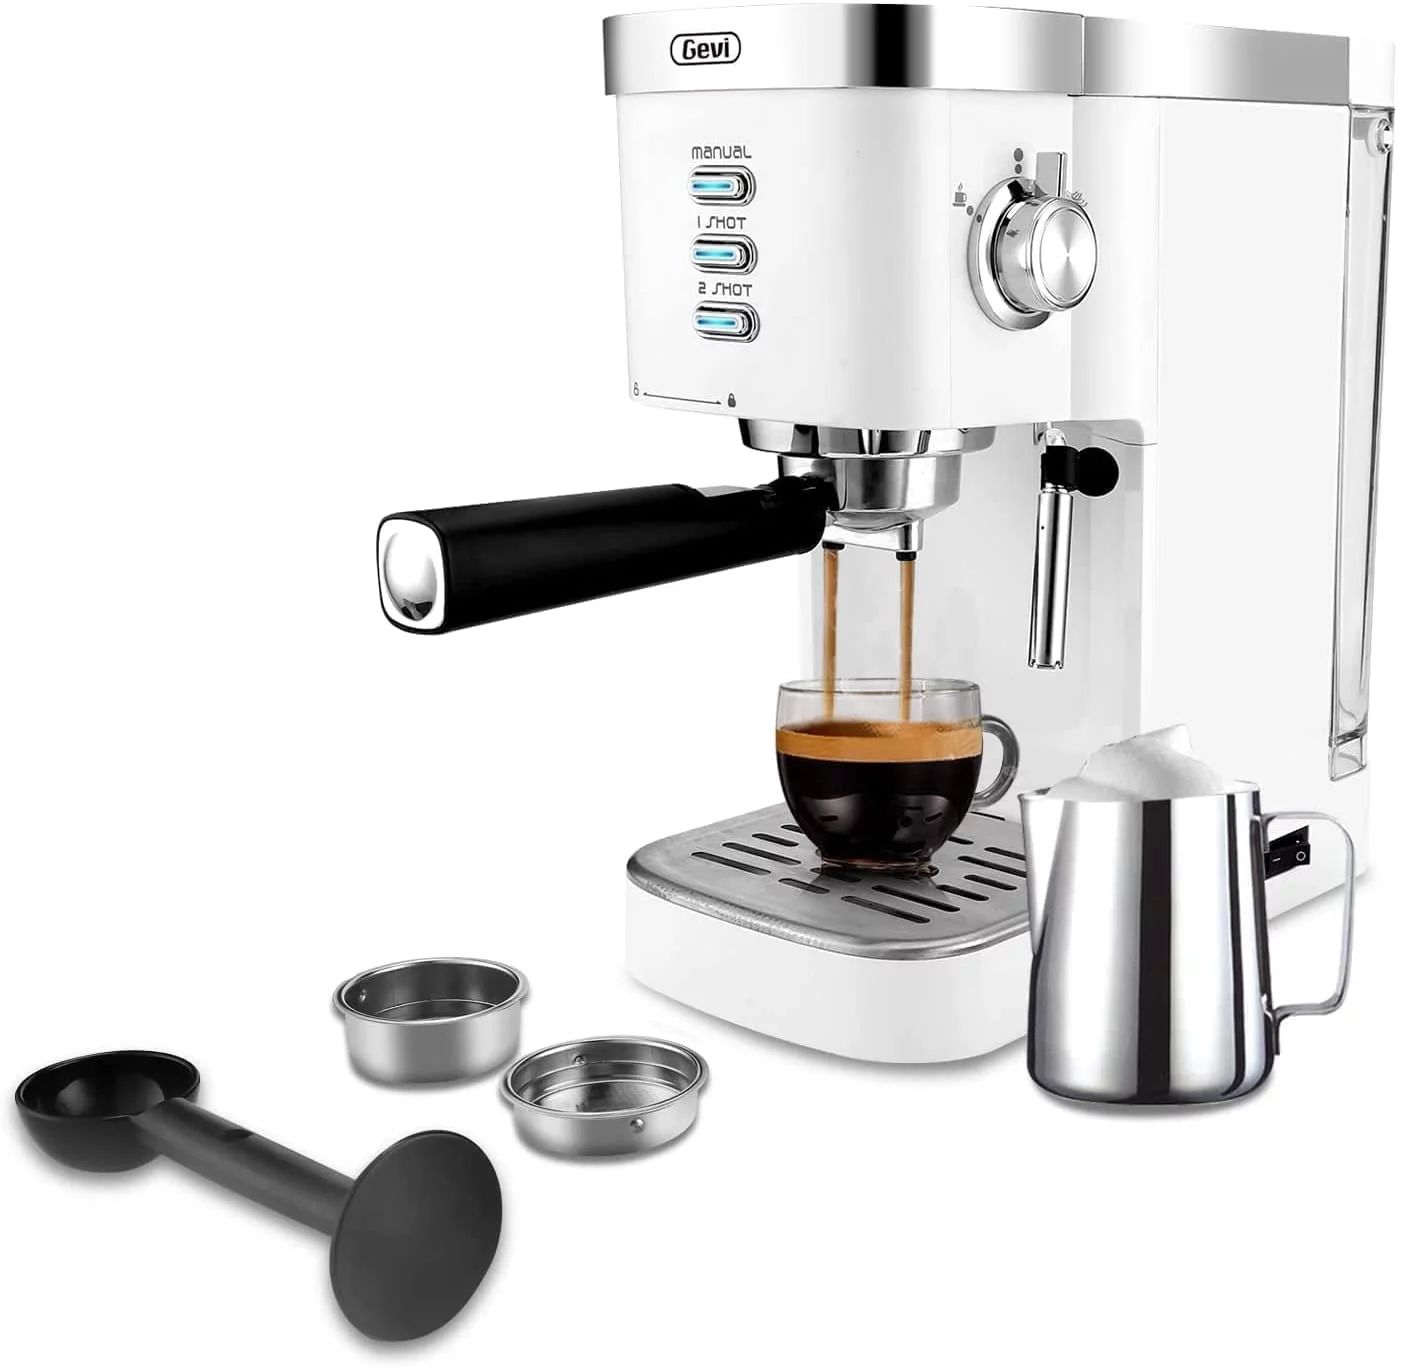 Gevi White Espresso Machine 20-Bar New Latte Cappuccino Maker with Frother, 1.25 L - Walmart.com | Walmart (US)